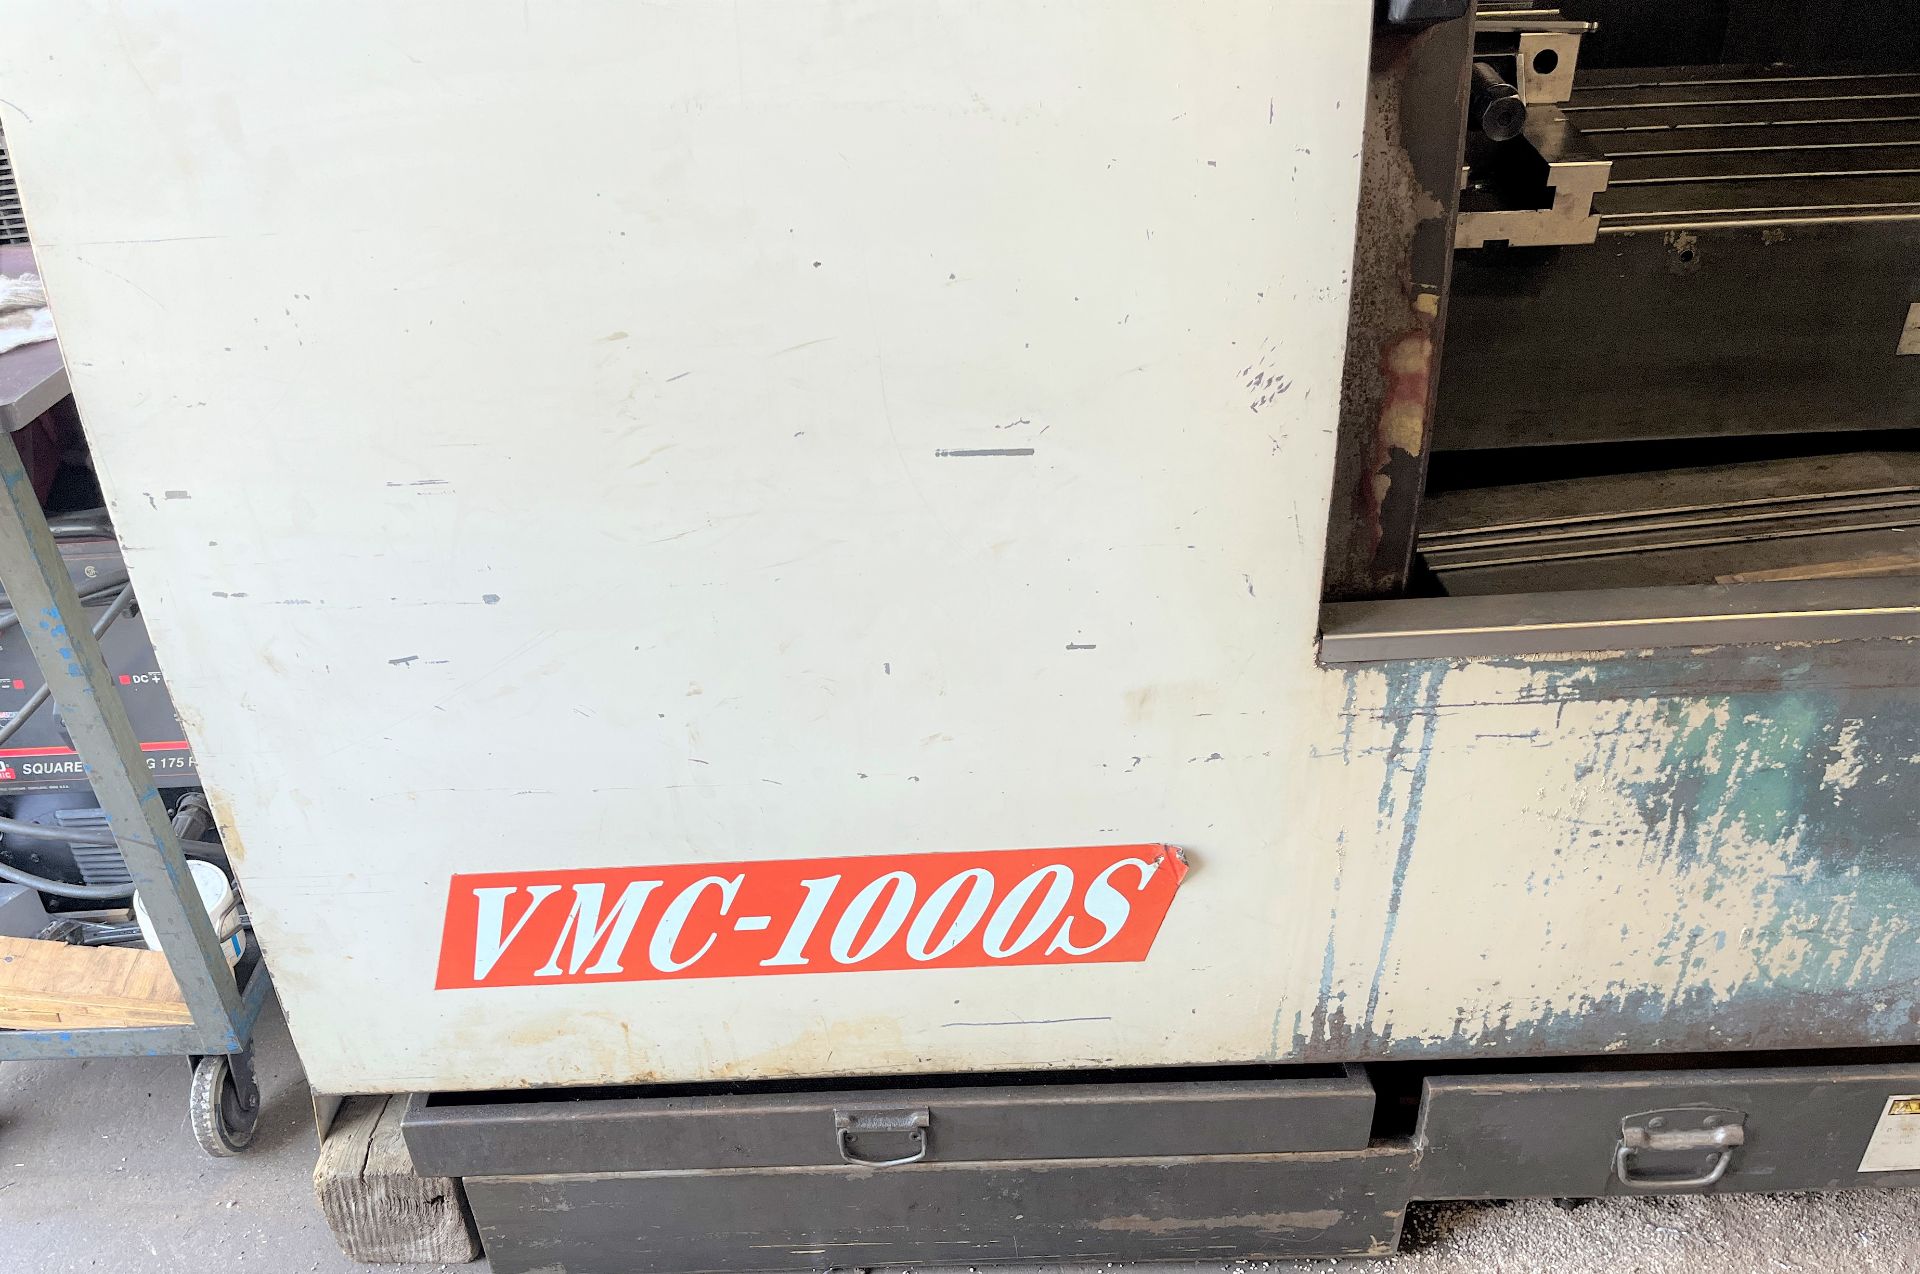 2002 PINNACLE VECTOR VMC-1000S CNC VERTICAL MACHINING CENTER, FANUC SERIES O-MD CNC CONTROL, 47” X - Image 6 of 20